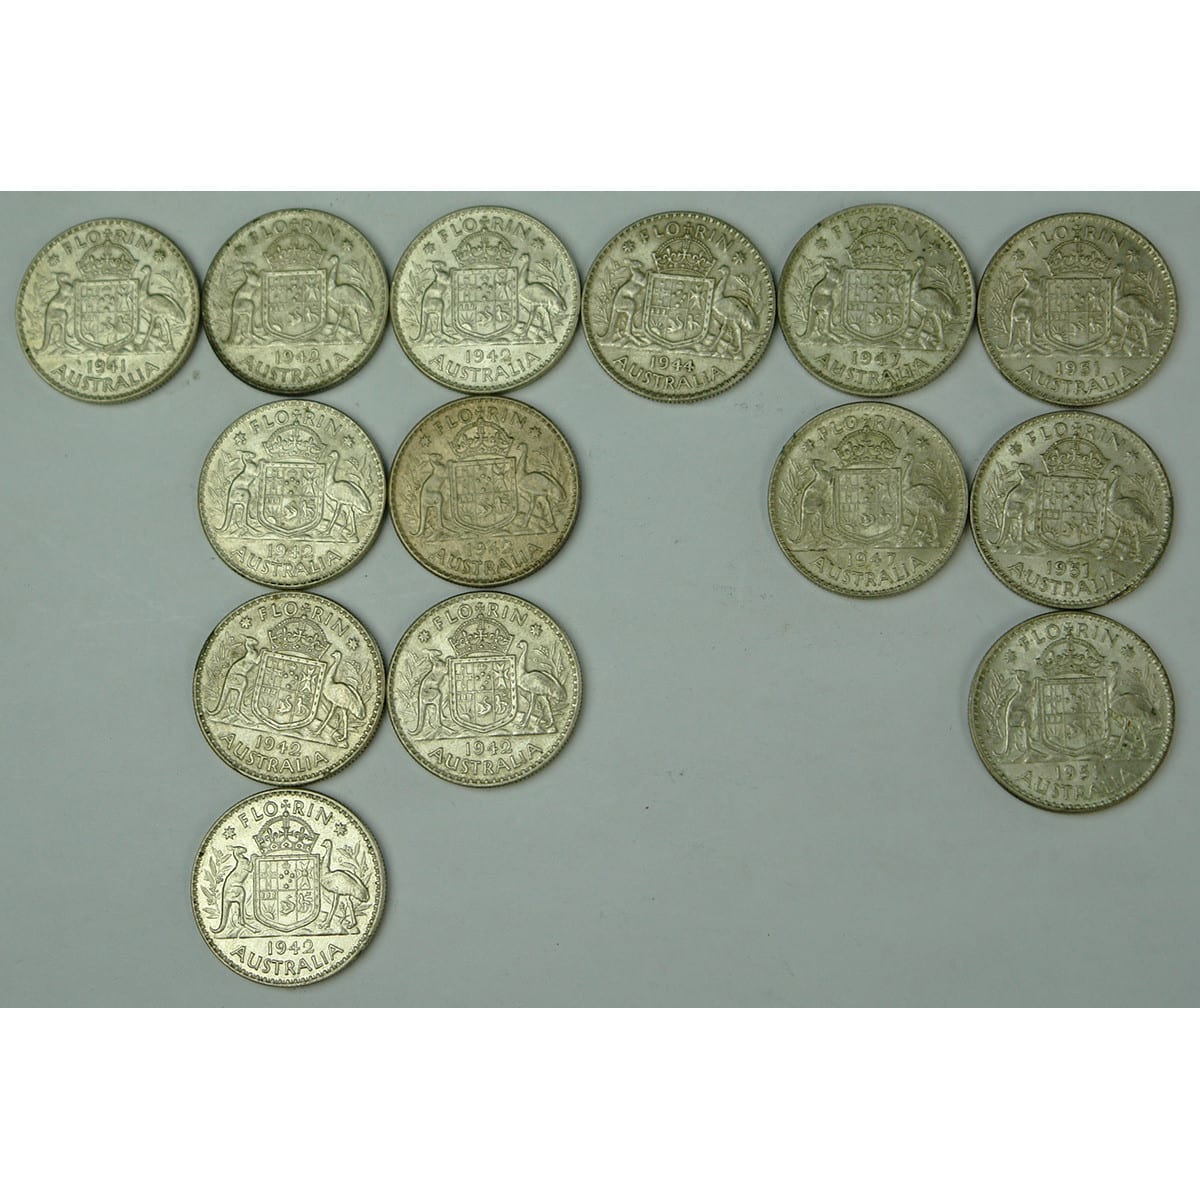 Coins. 14 Australian Florins: 1 x 1941, 7 x 1942, 1 x 1944, 2 x 1947 and 3 x 1951.